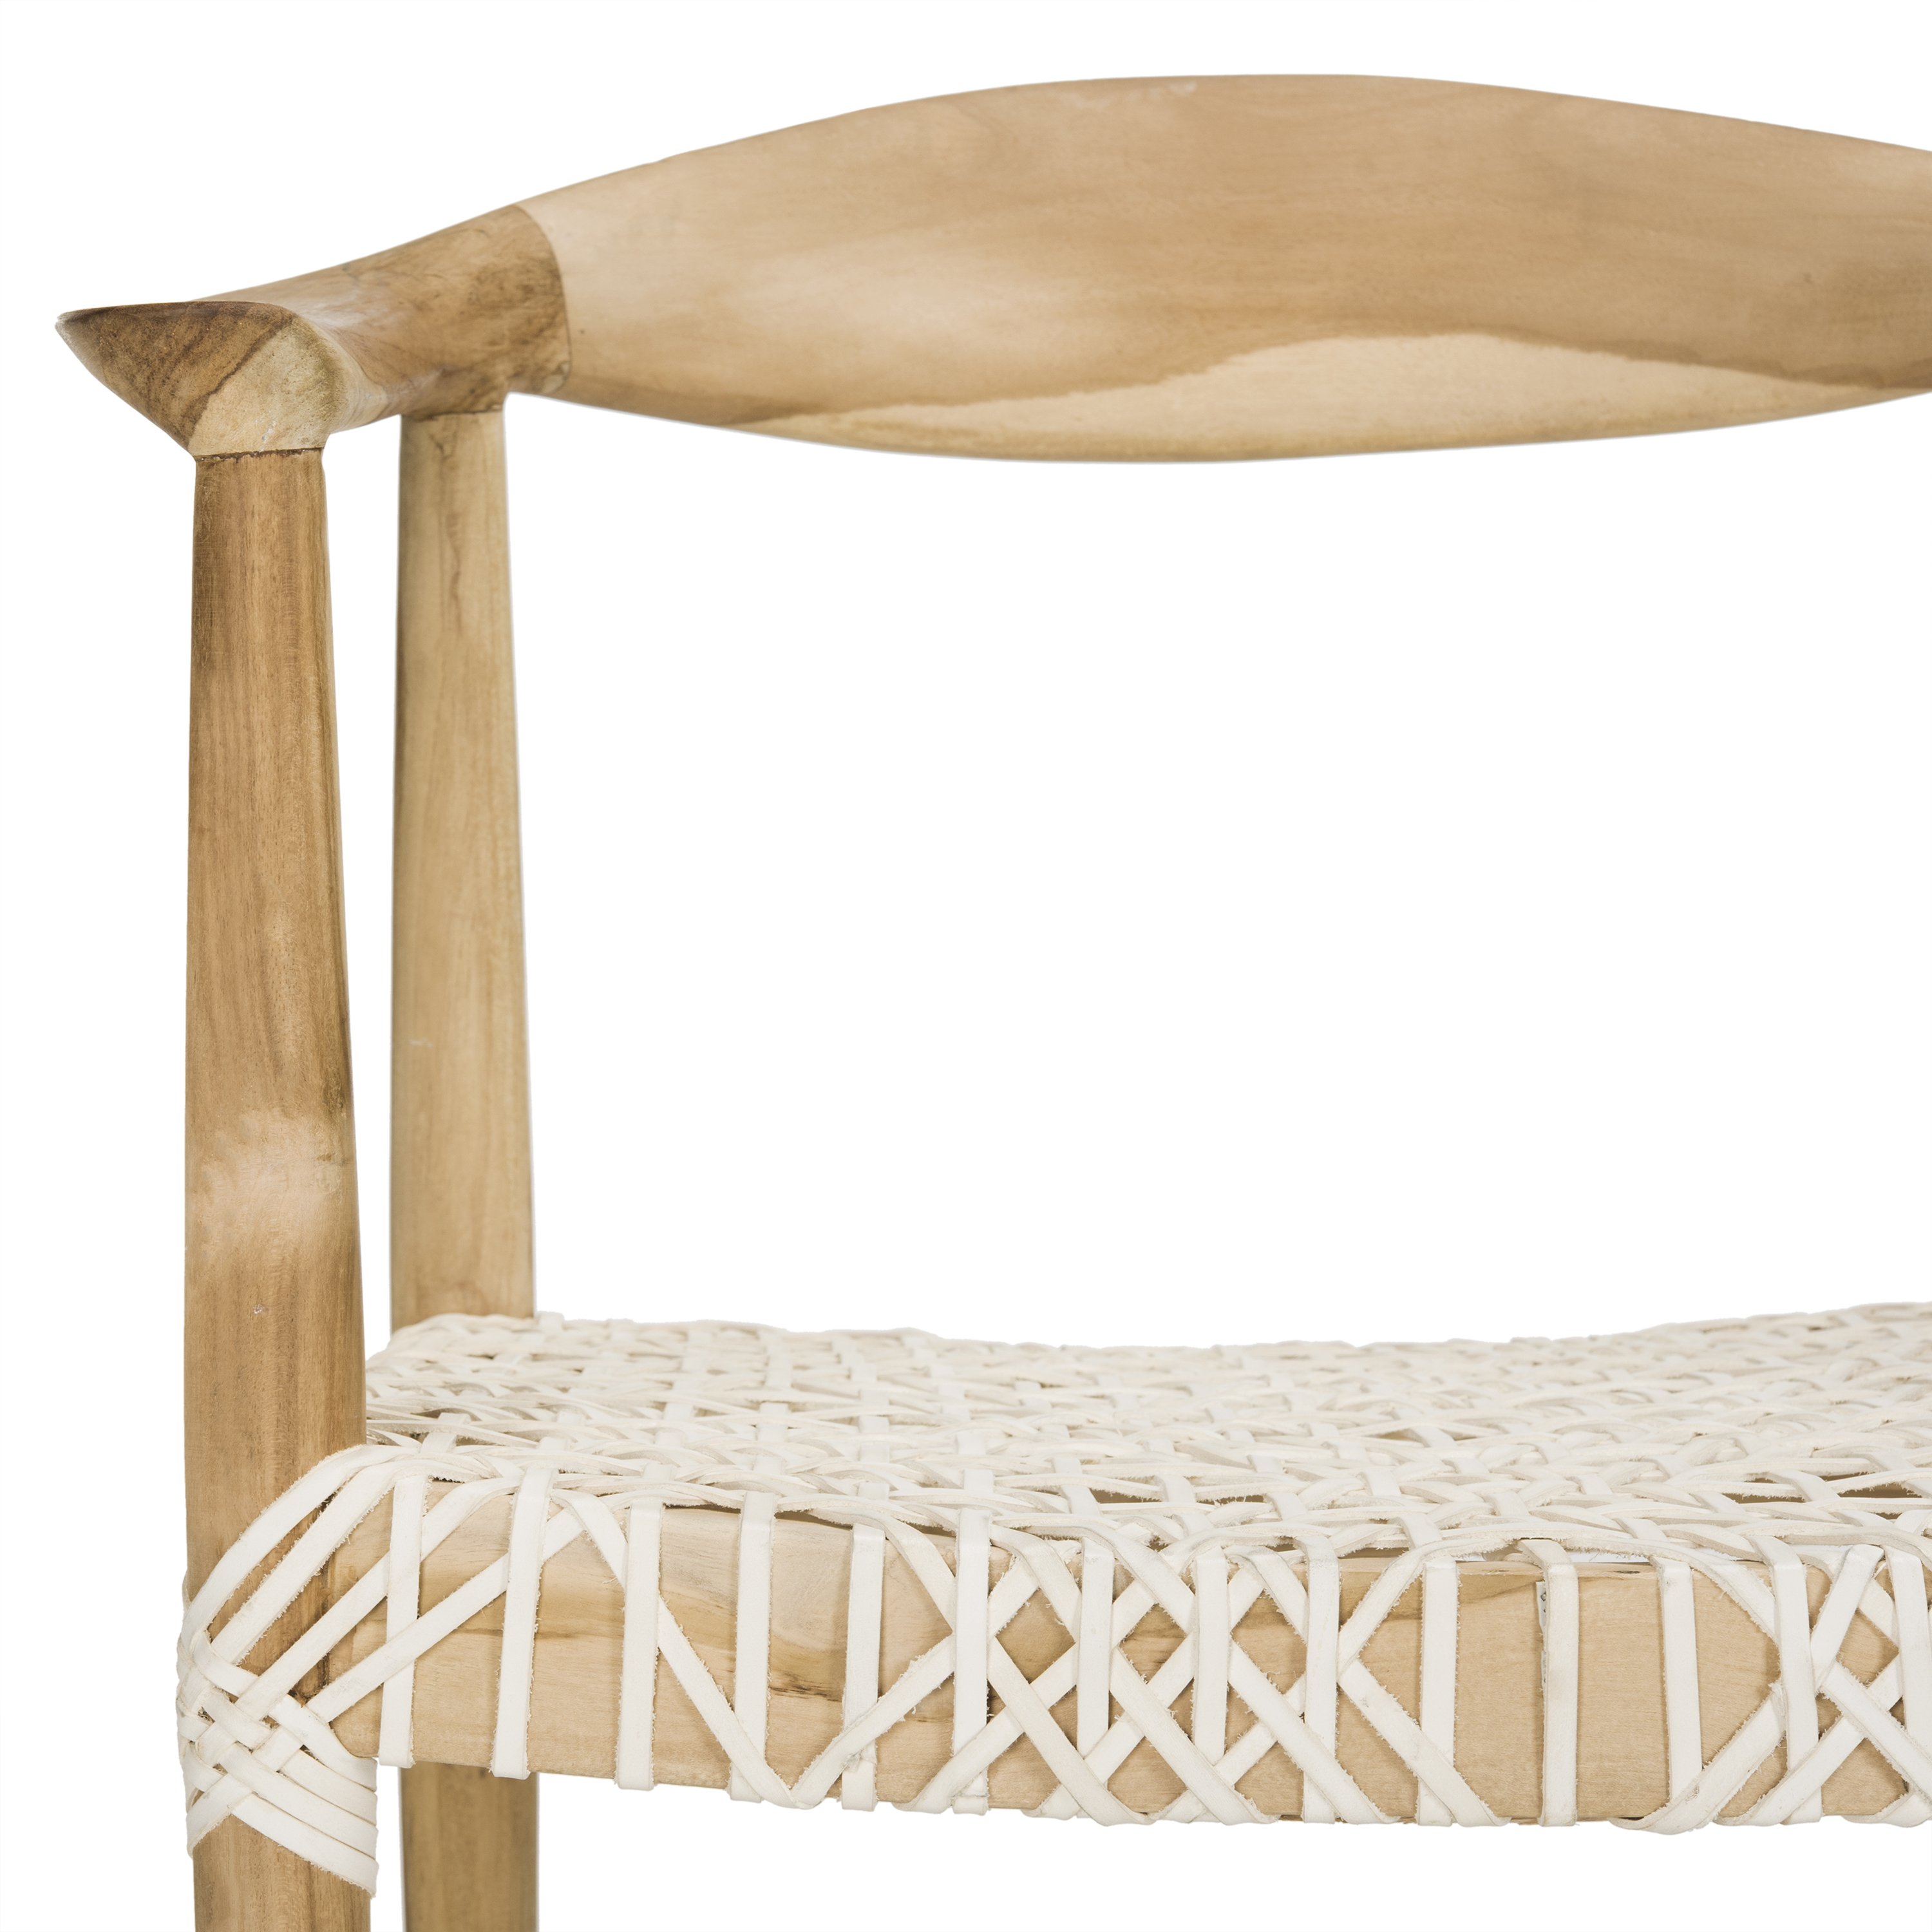 Safavieh Fox Club Chair, Light Oak - image 4 of 10